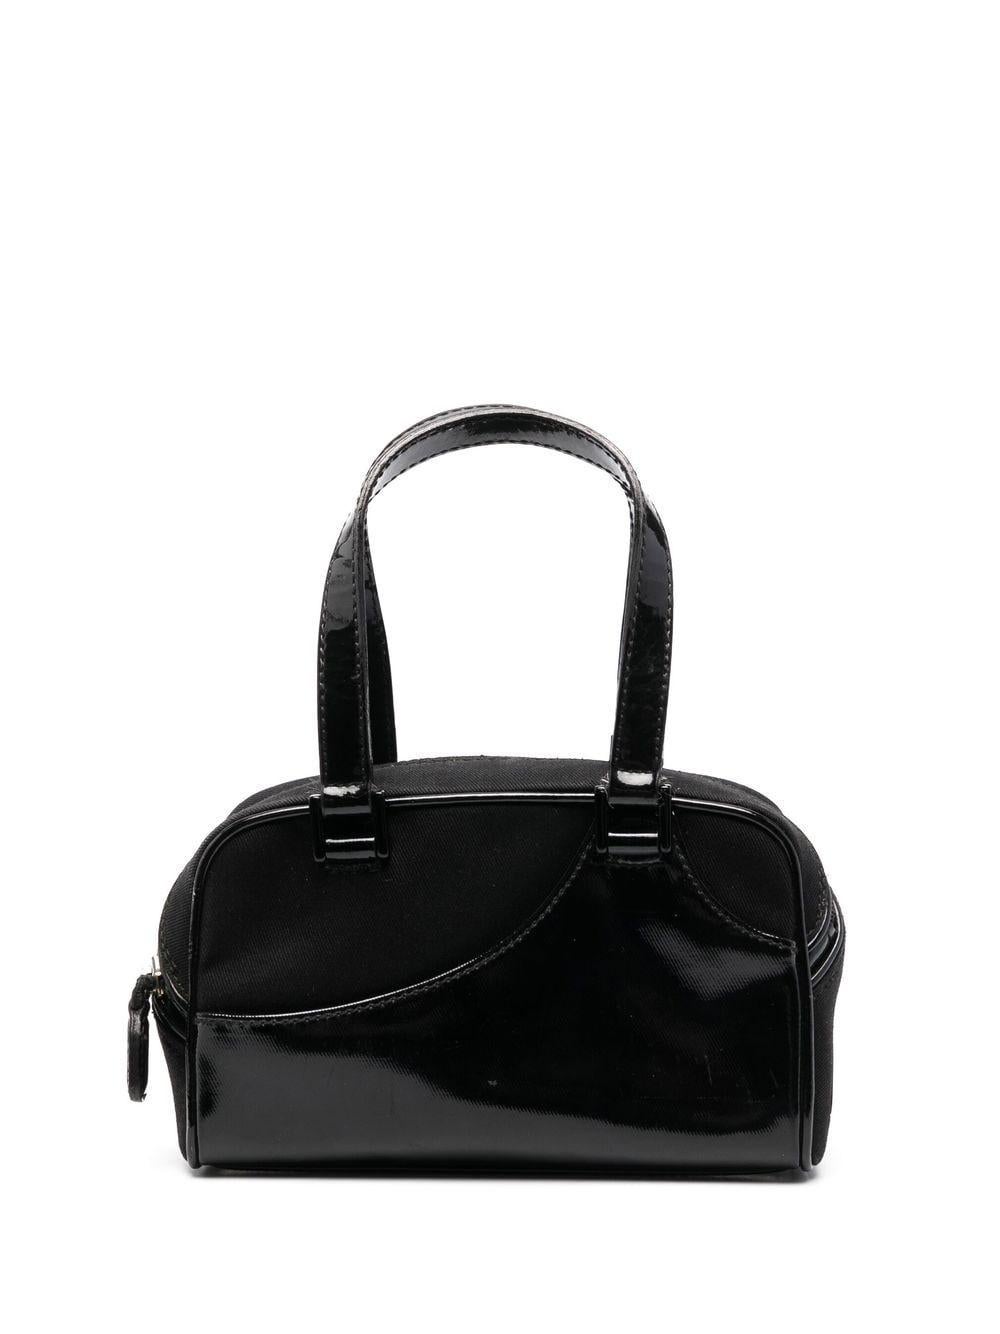 Christian Dior Black Patent Mini Handbag 2